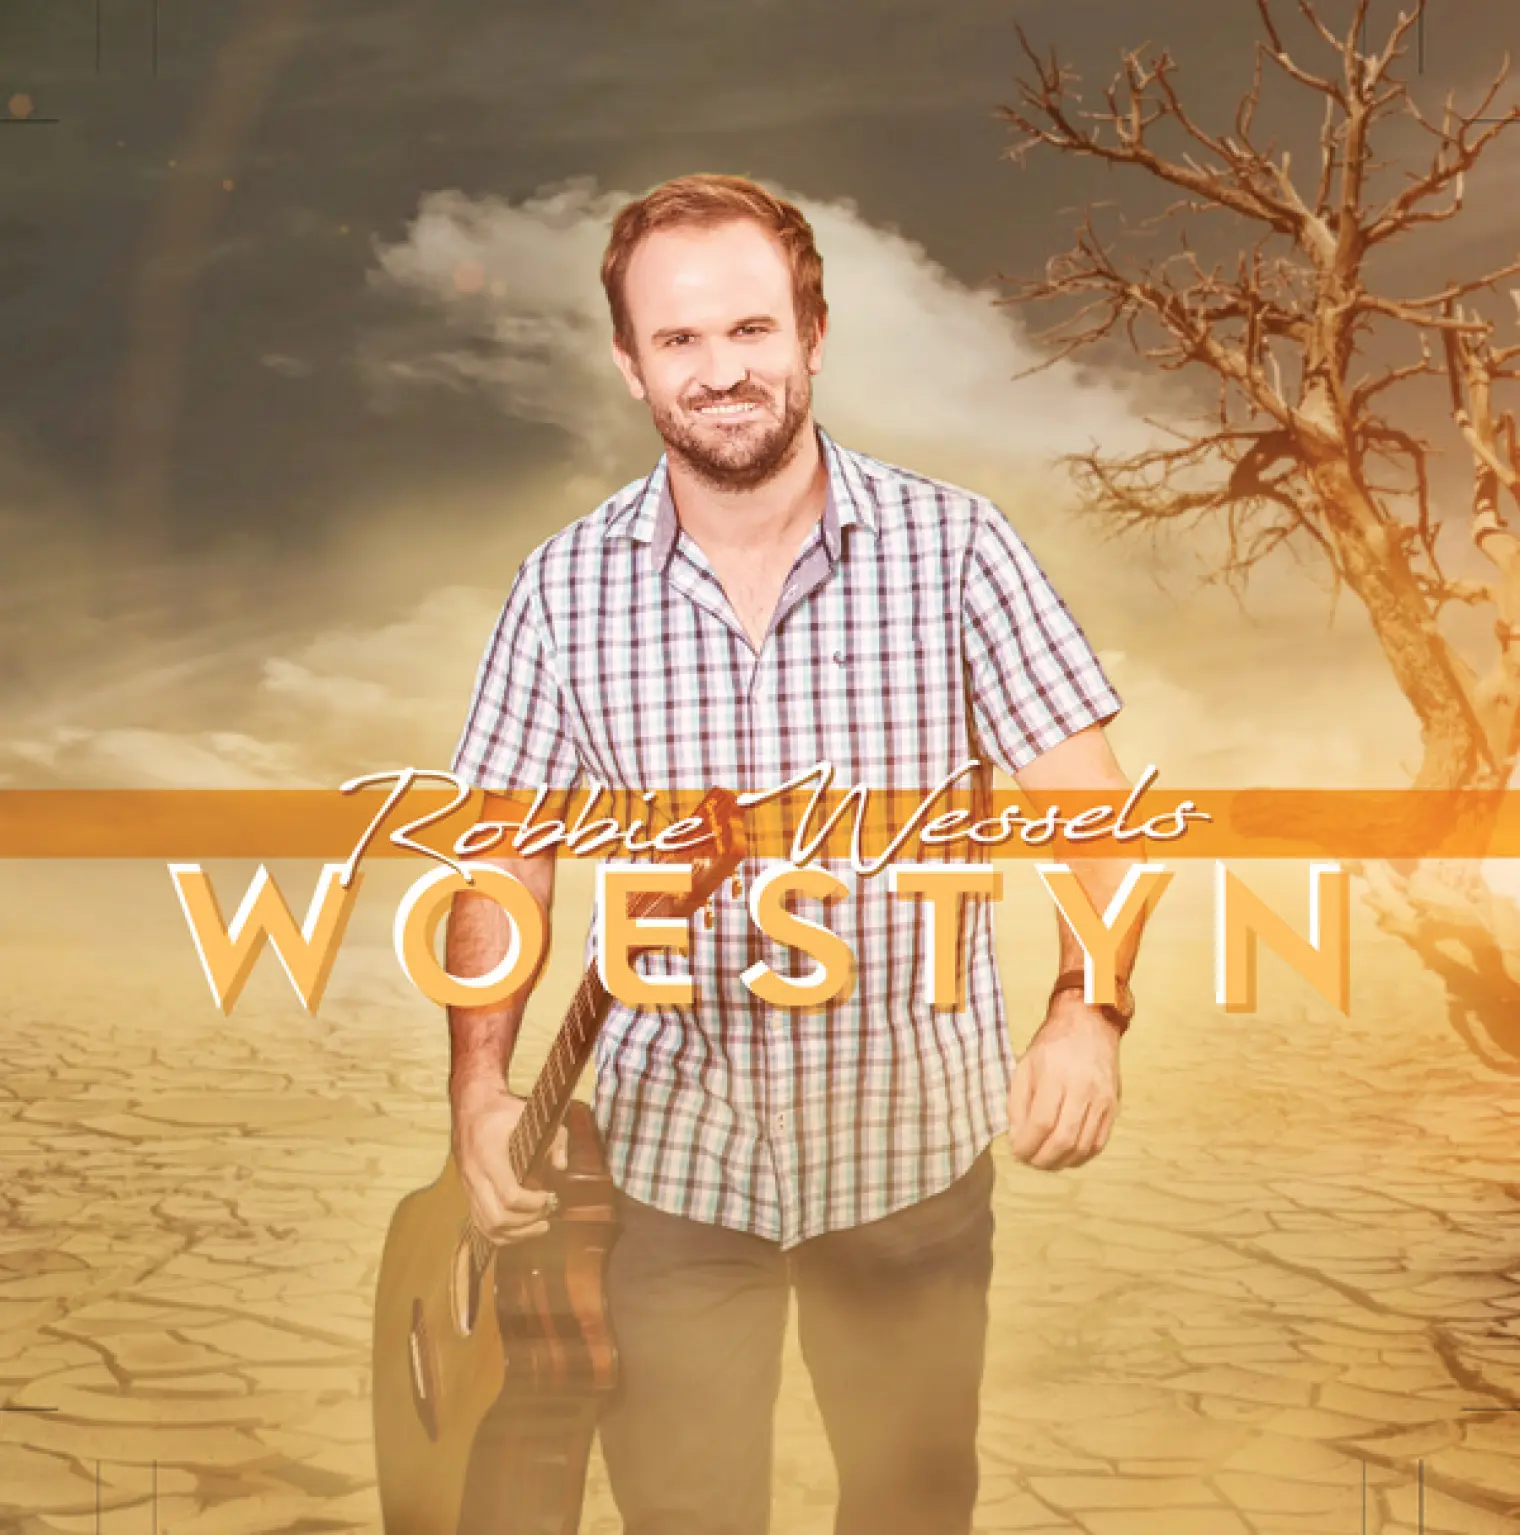 Woestyn -  Robbie Wessels 